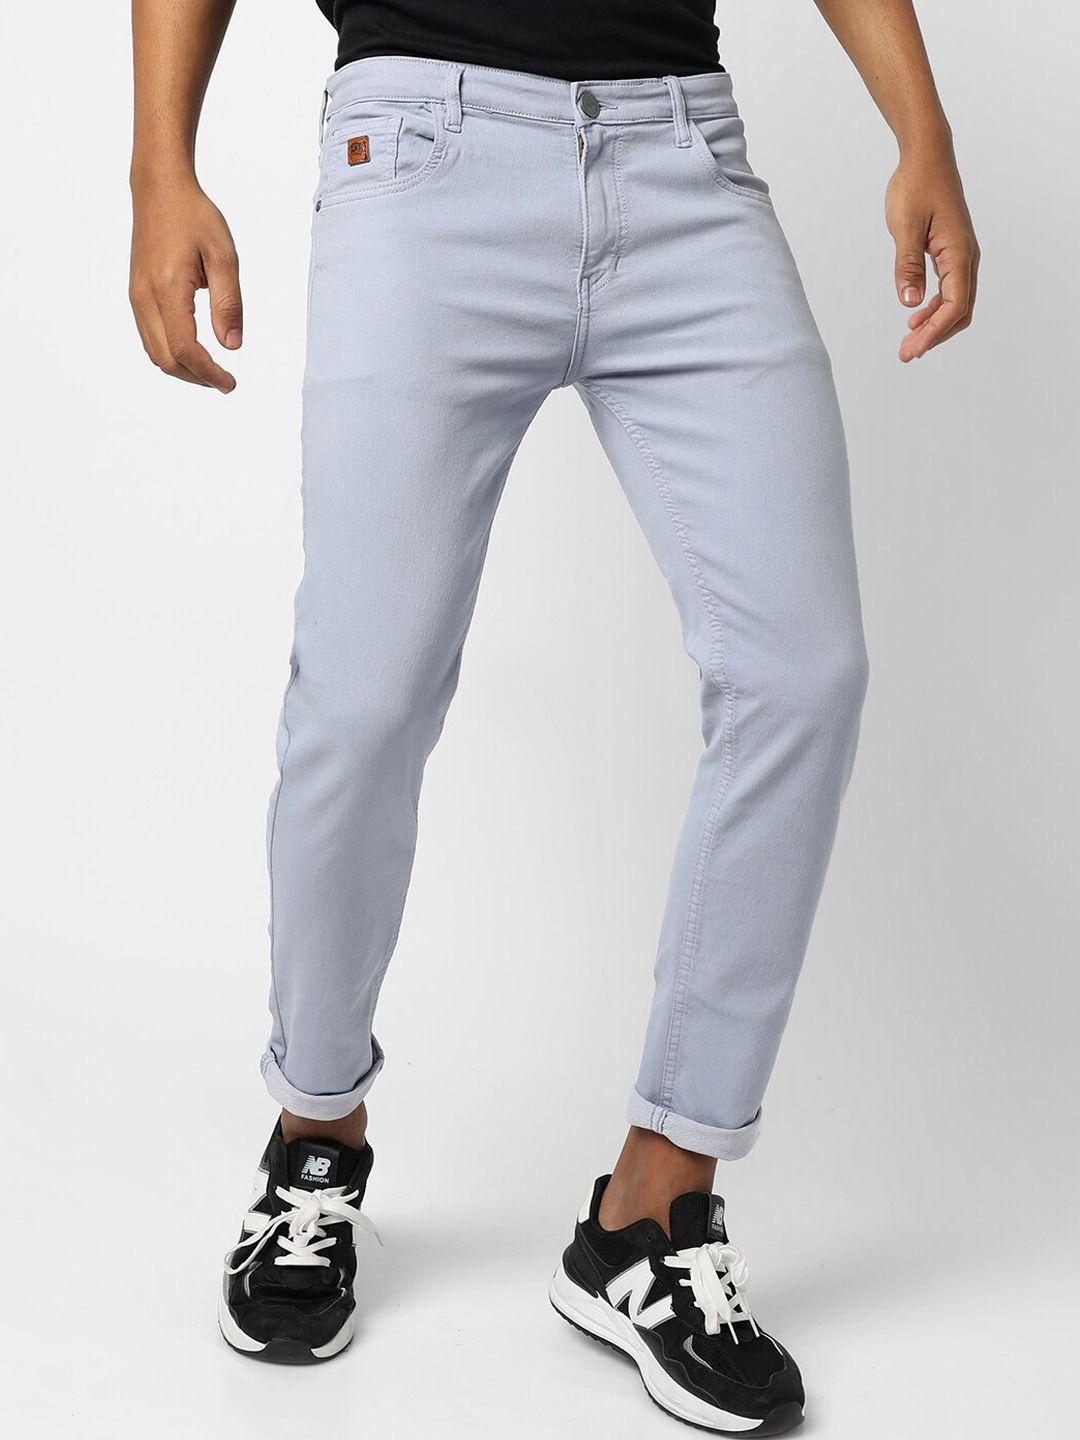 campus-sutra-men-grey-smart-slim-fit-stretchable-jeans